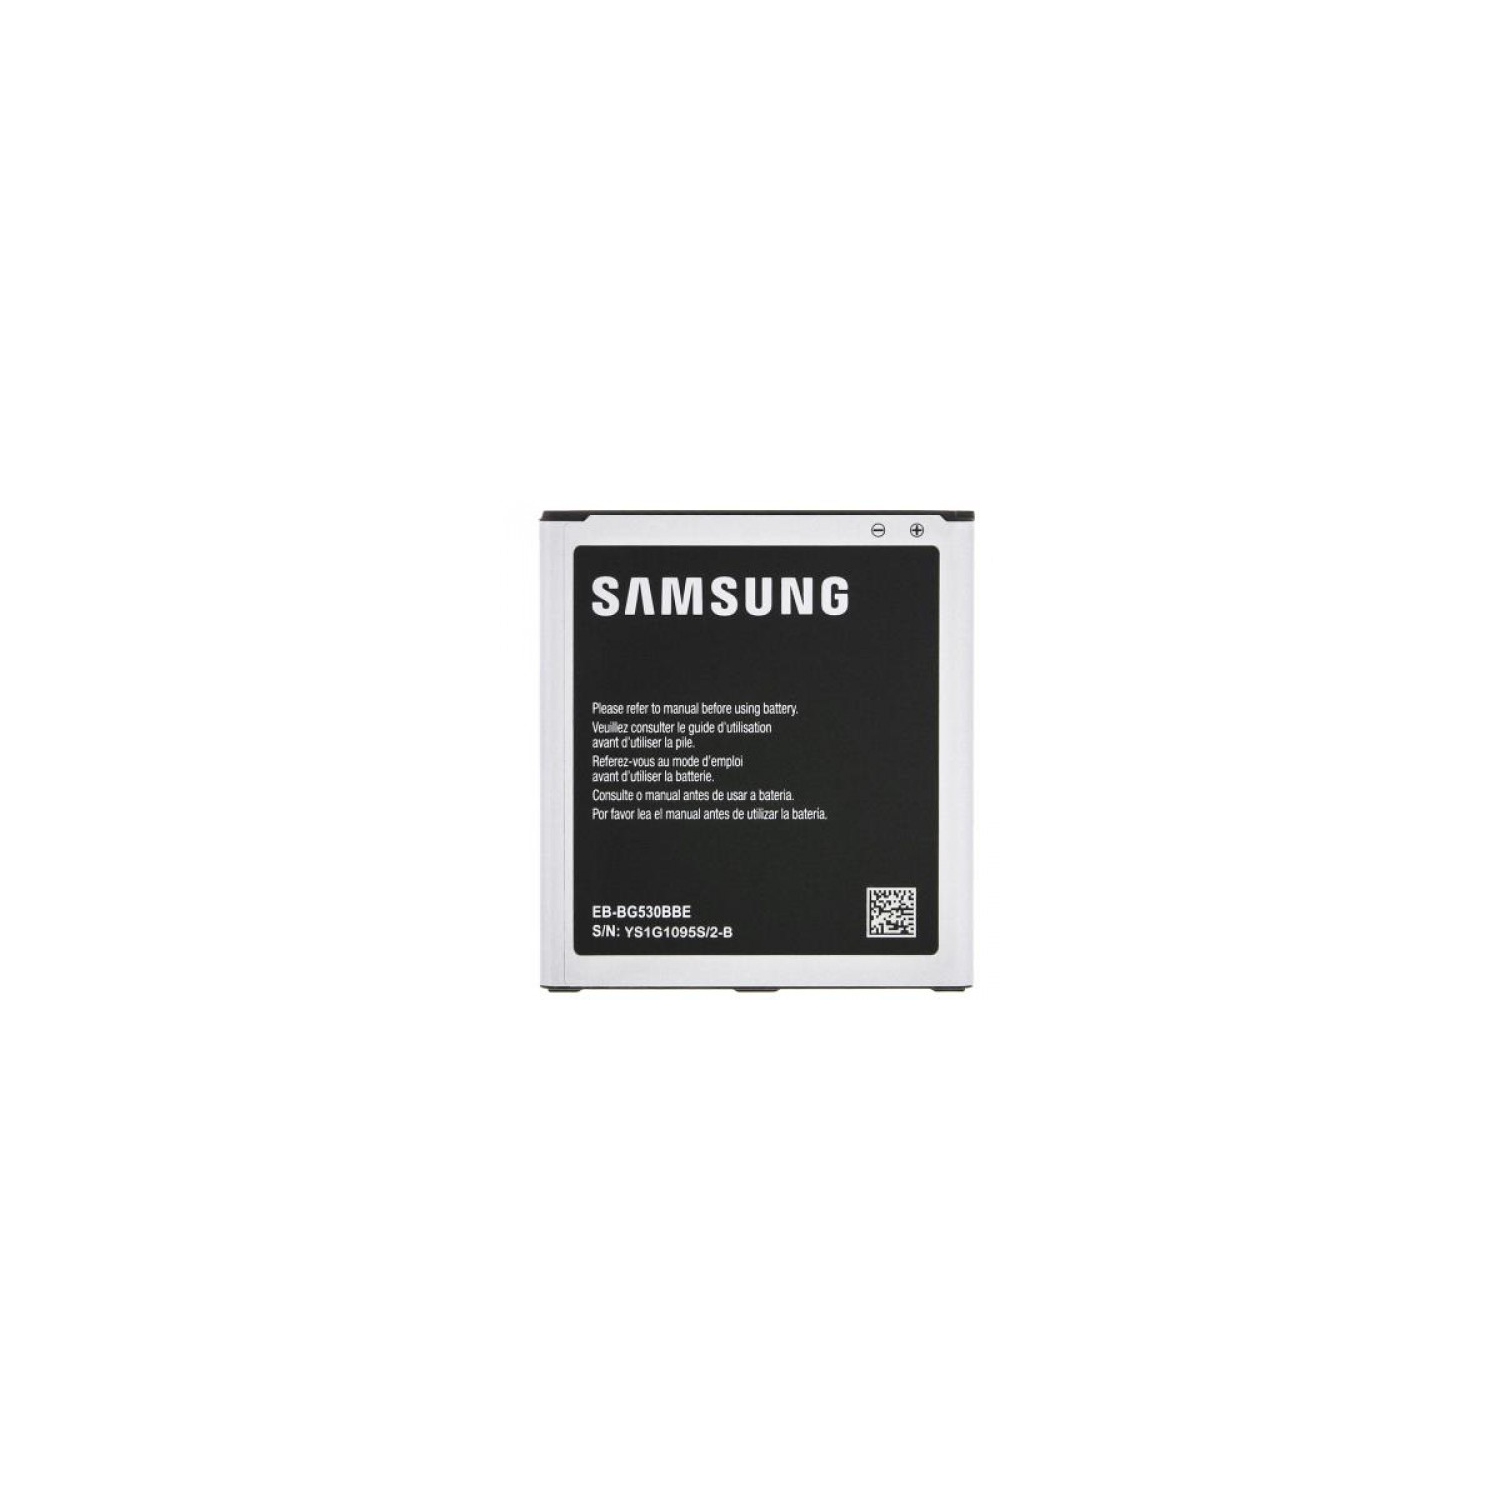 Samsung Grand Prime / J3 Prime Pro / J5 / On5 Replacement Battery with NFC, G530 EB-BG530BBU / EB-BG530BBE